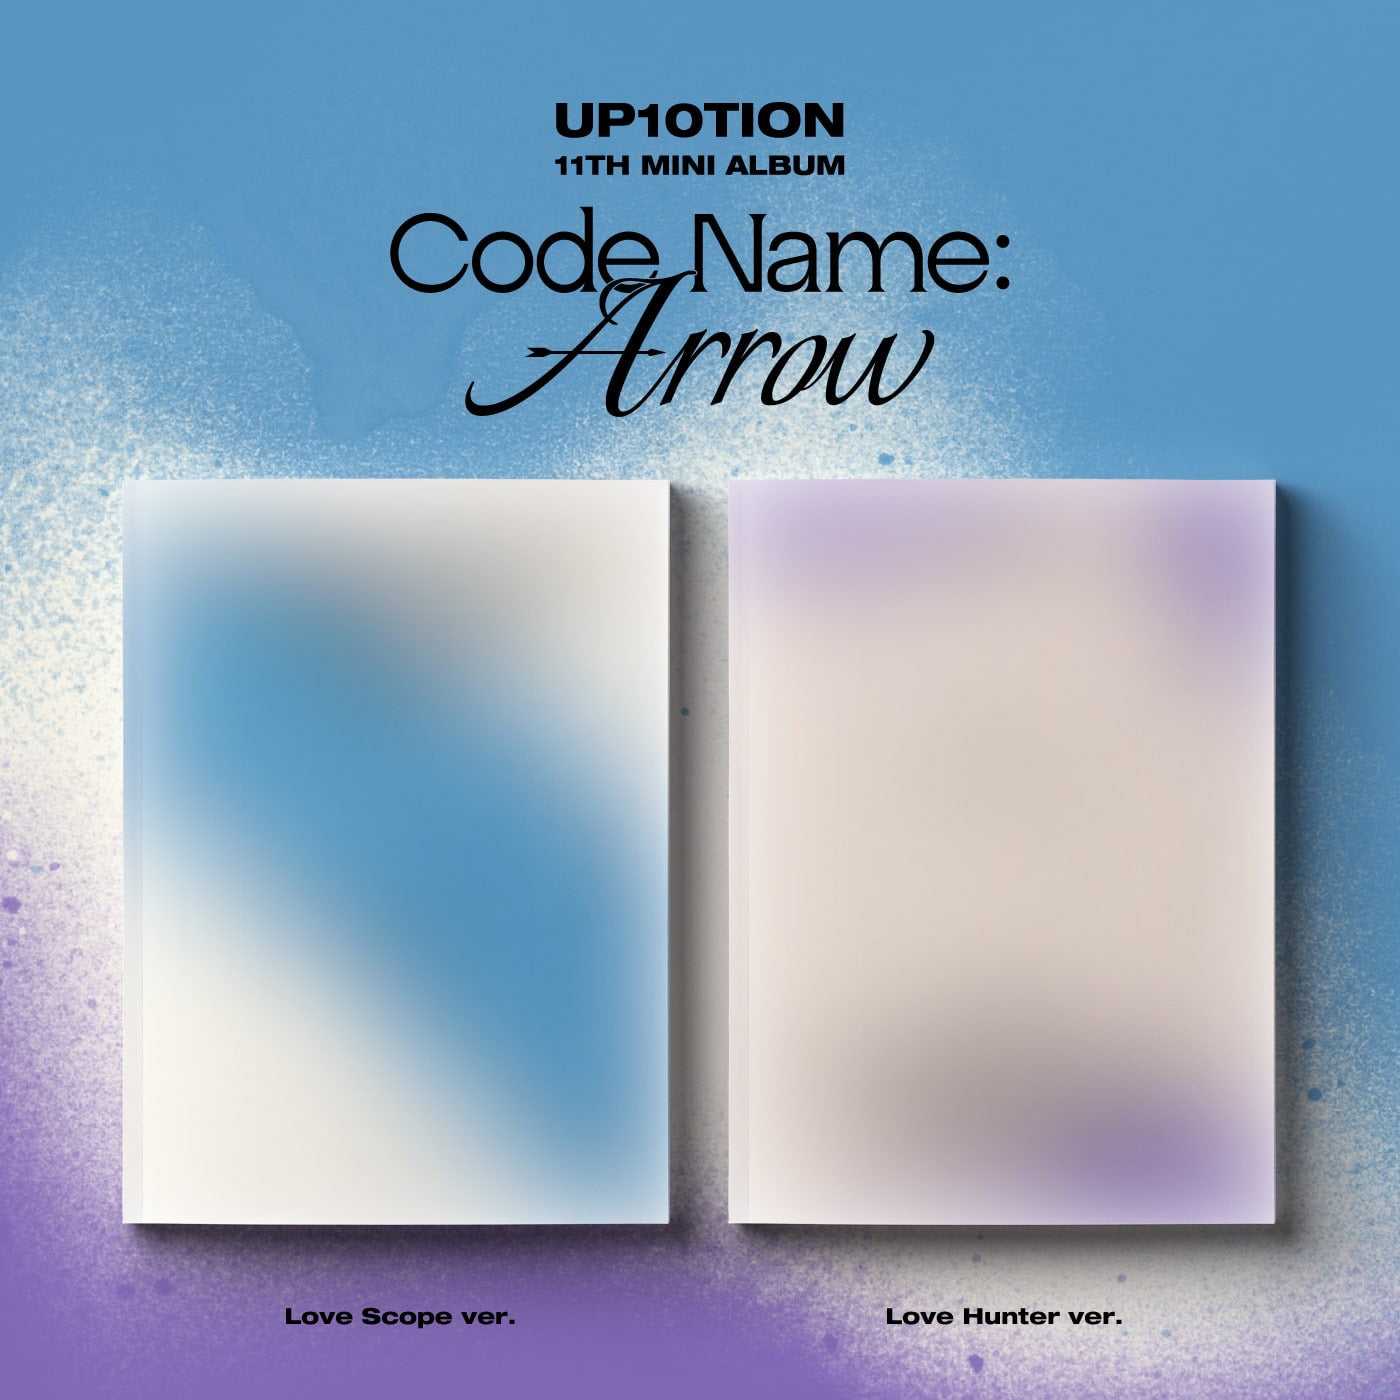 UP10TION [Code Name: Arrow] 11th Mini Album